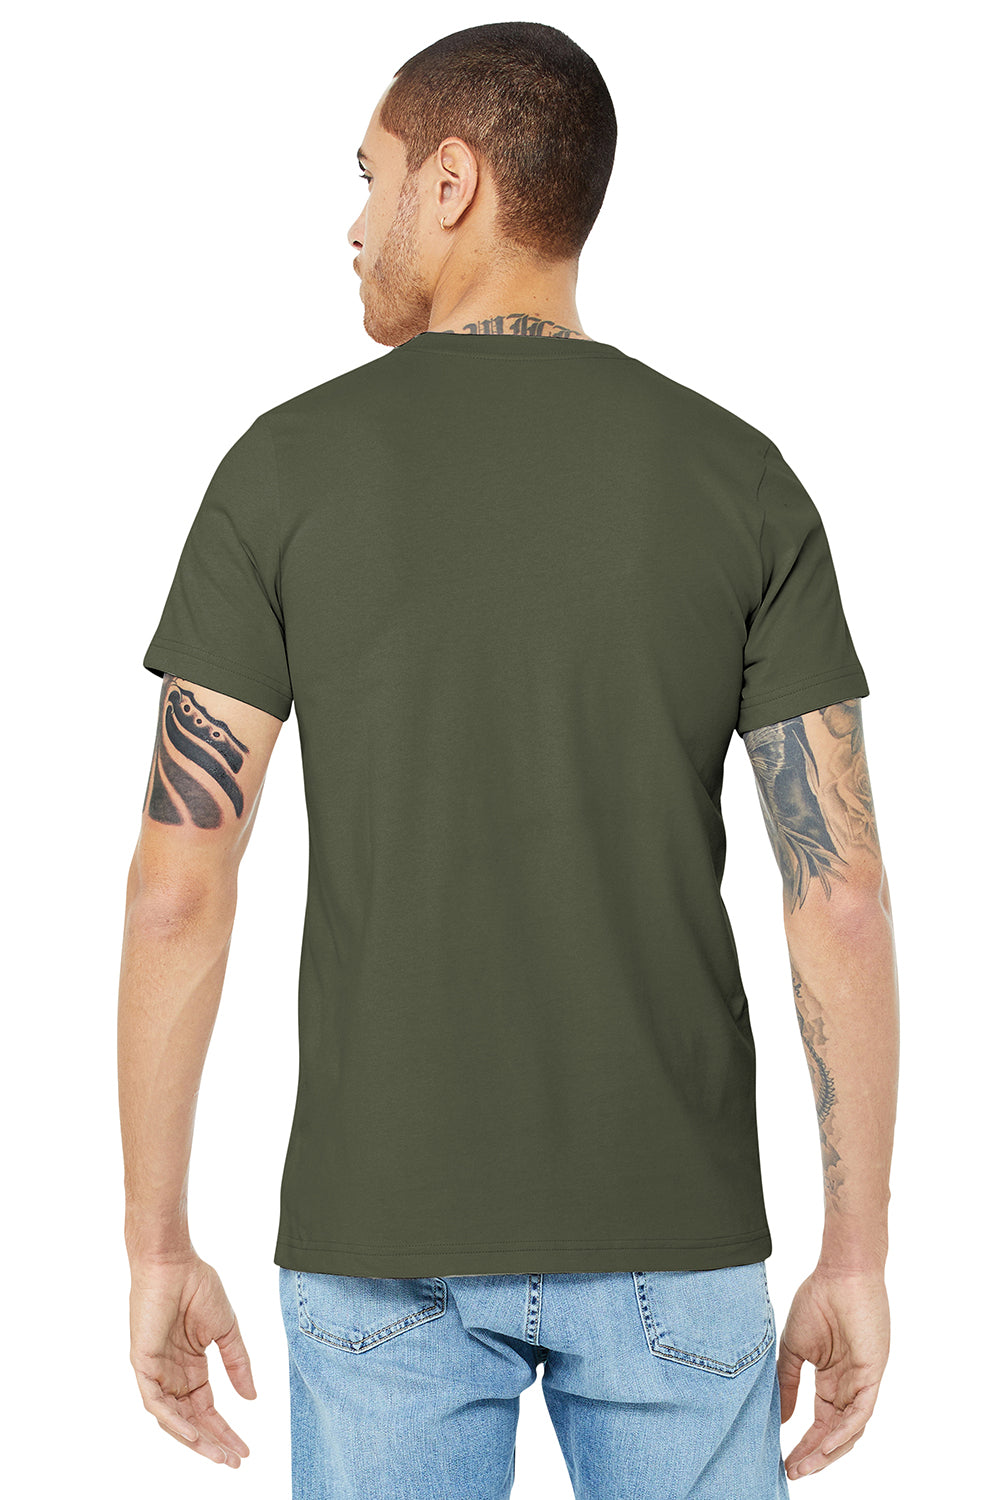 Bella + Canvas BC3001/3001C Mens Jersey Short Sleeve Crewneck T-Shirt Army Green Model Back